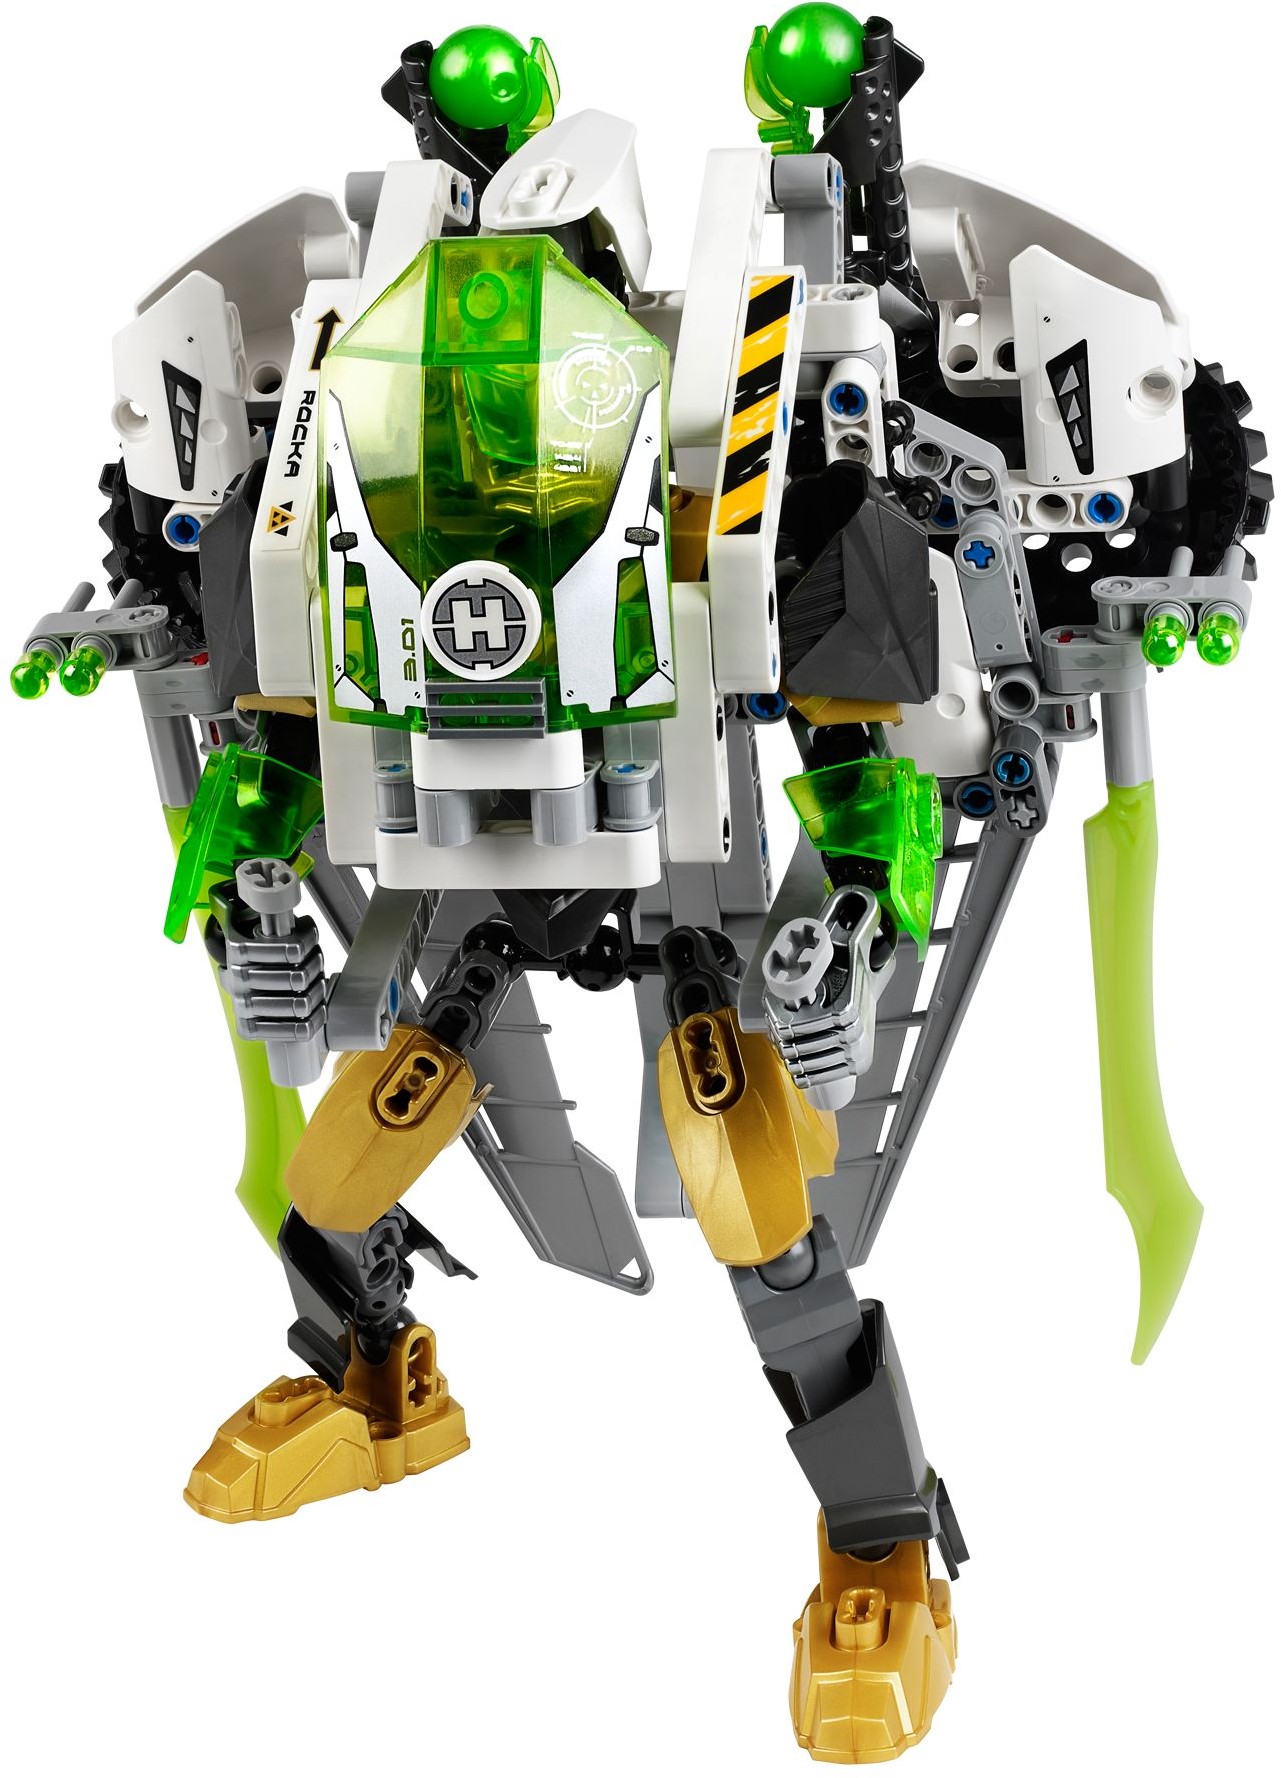 Lego Hero Factory: Brain Attack, Roblox Wiki